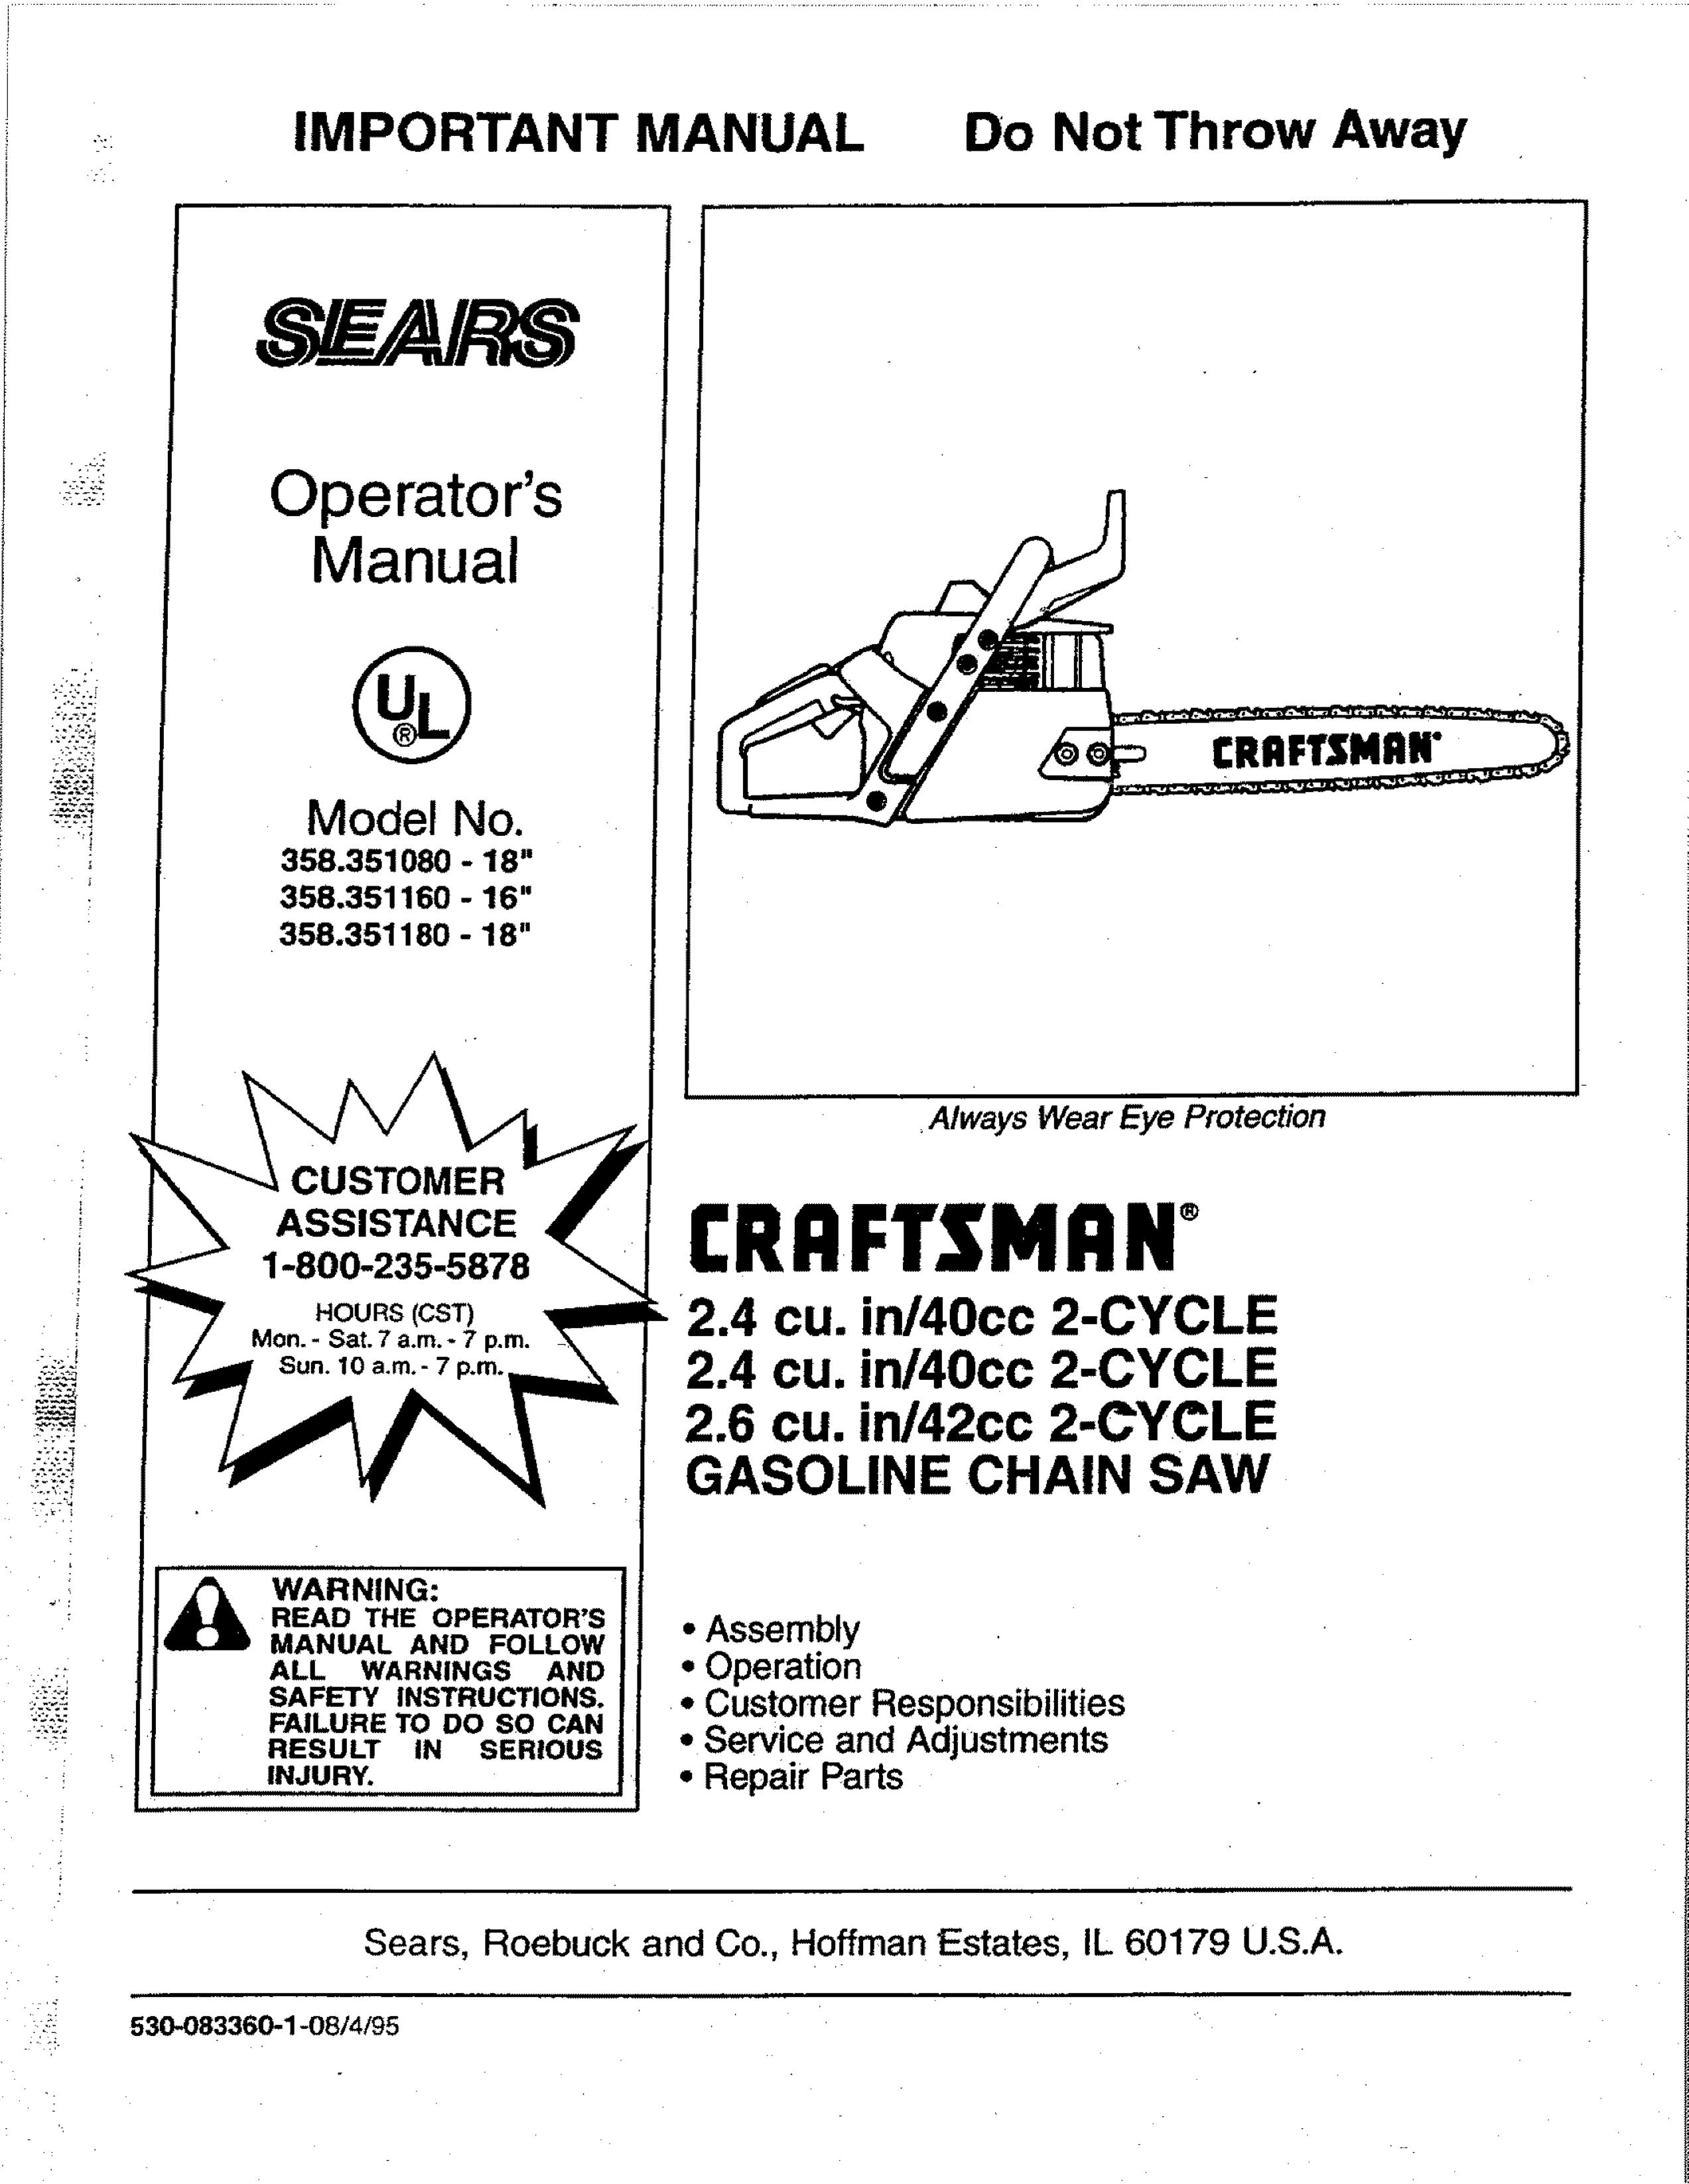 Sears 358.351180-18" Chainsaw User Manual